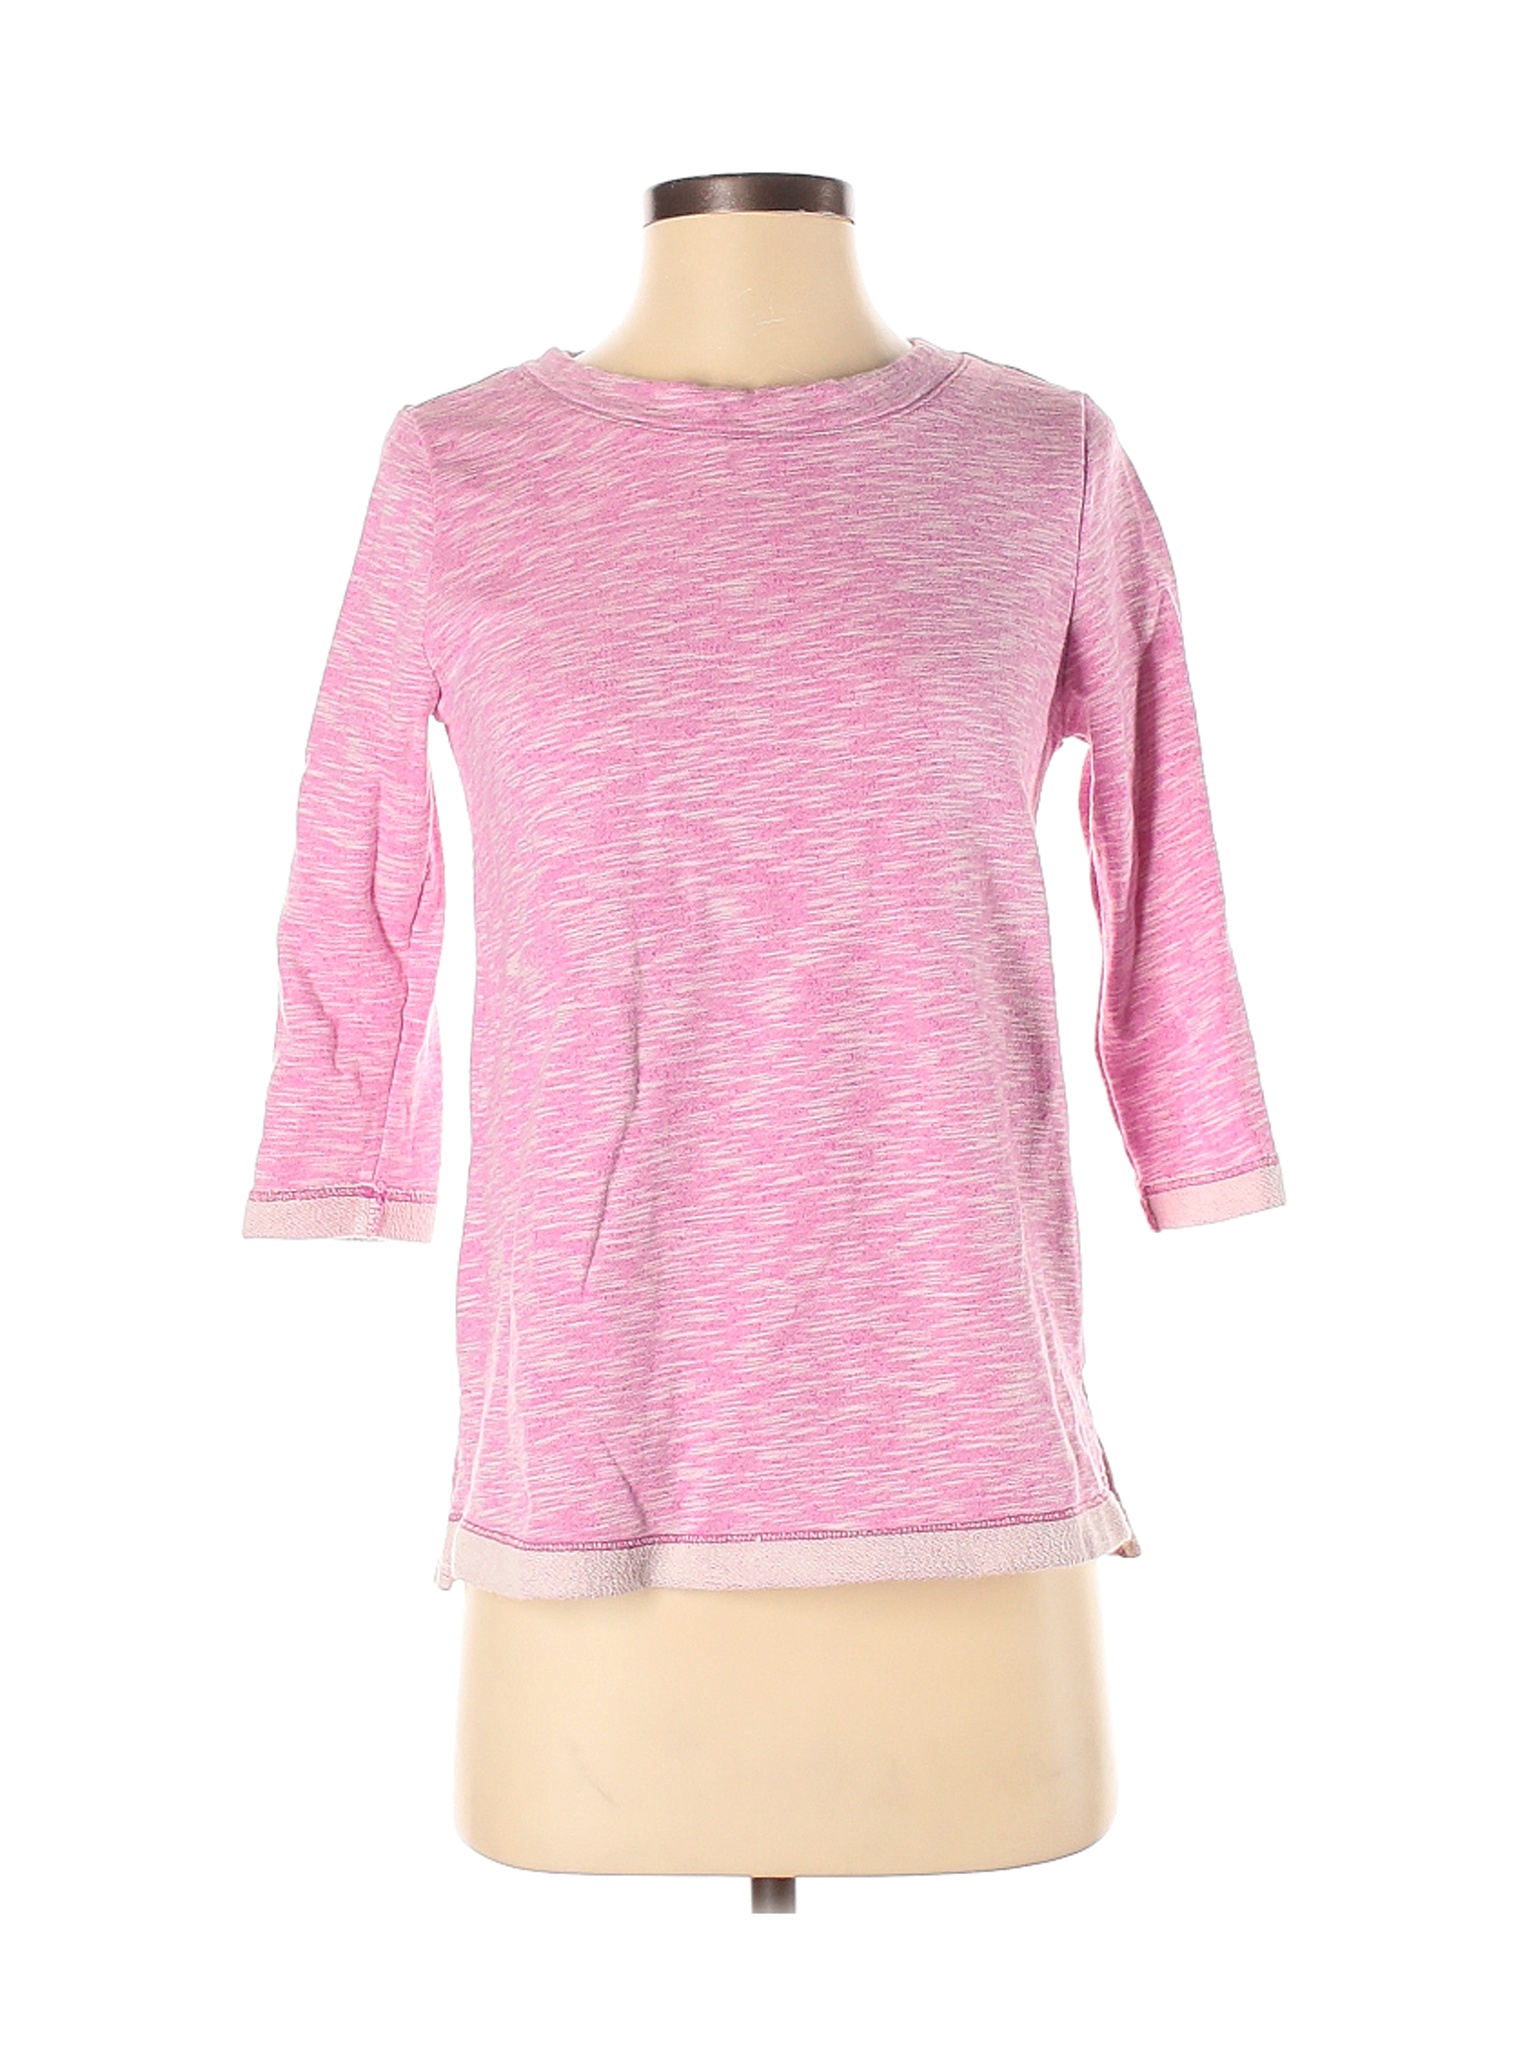 Gap Women Pink Sweatshirt XS | eBay